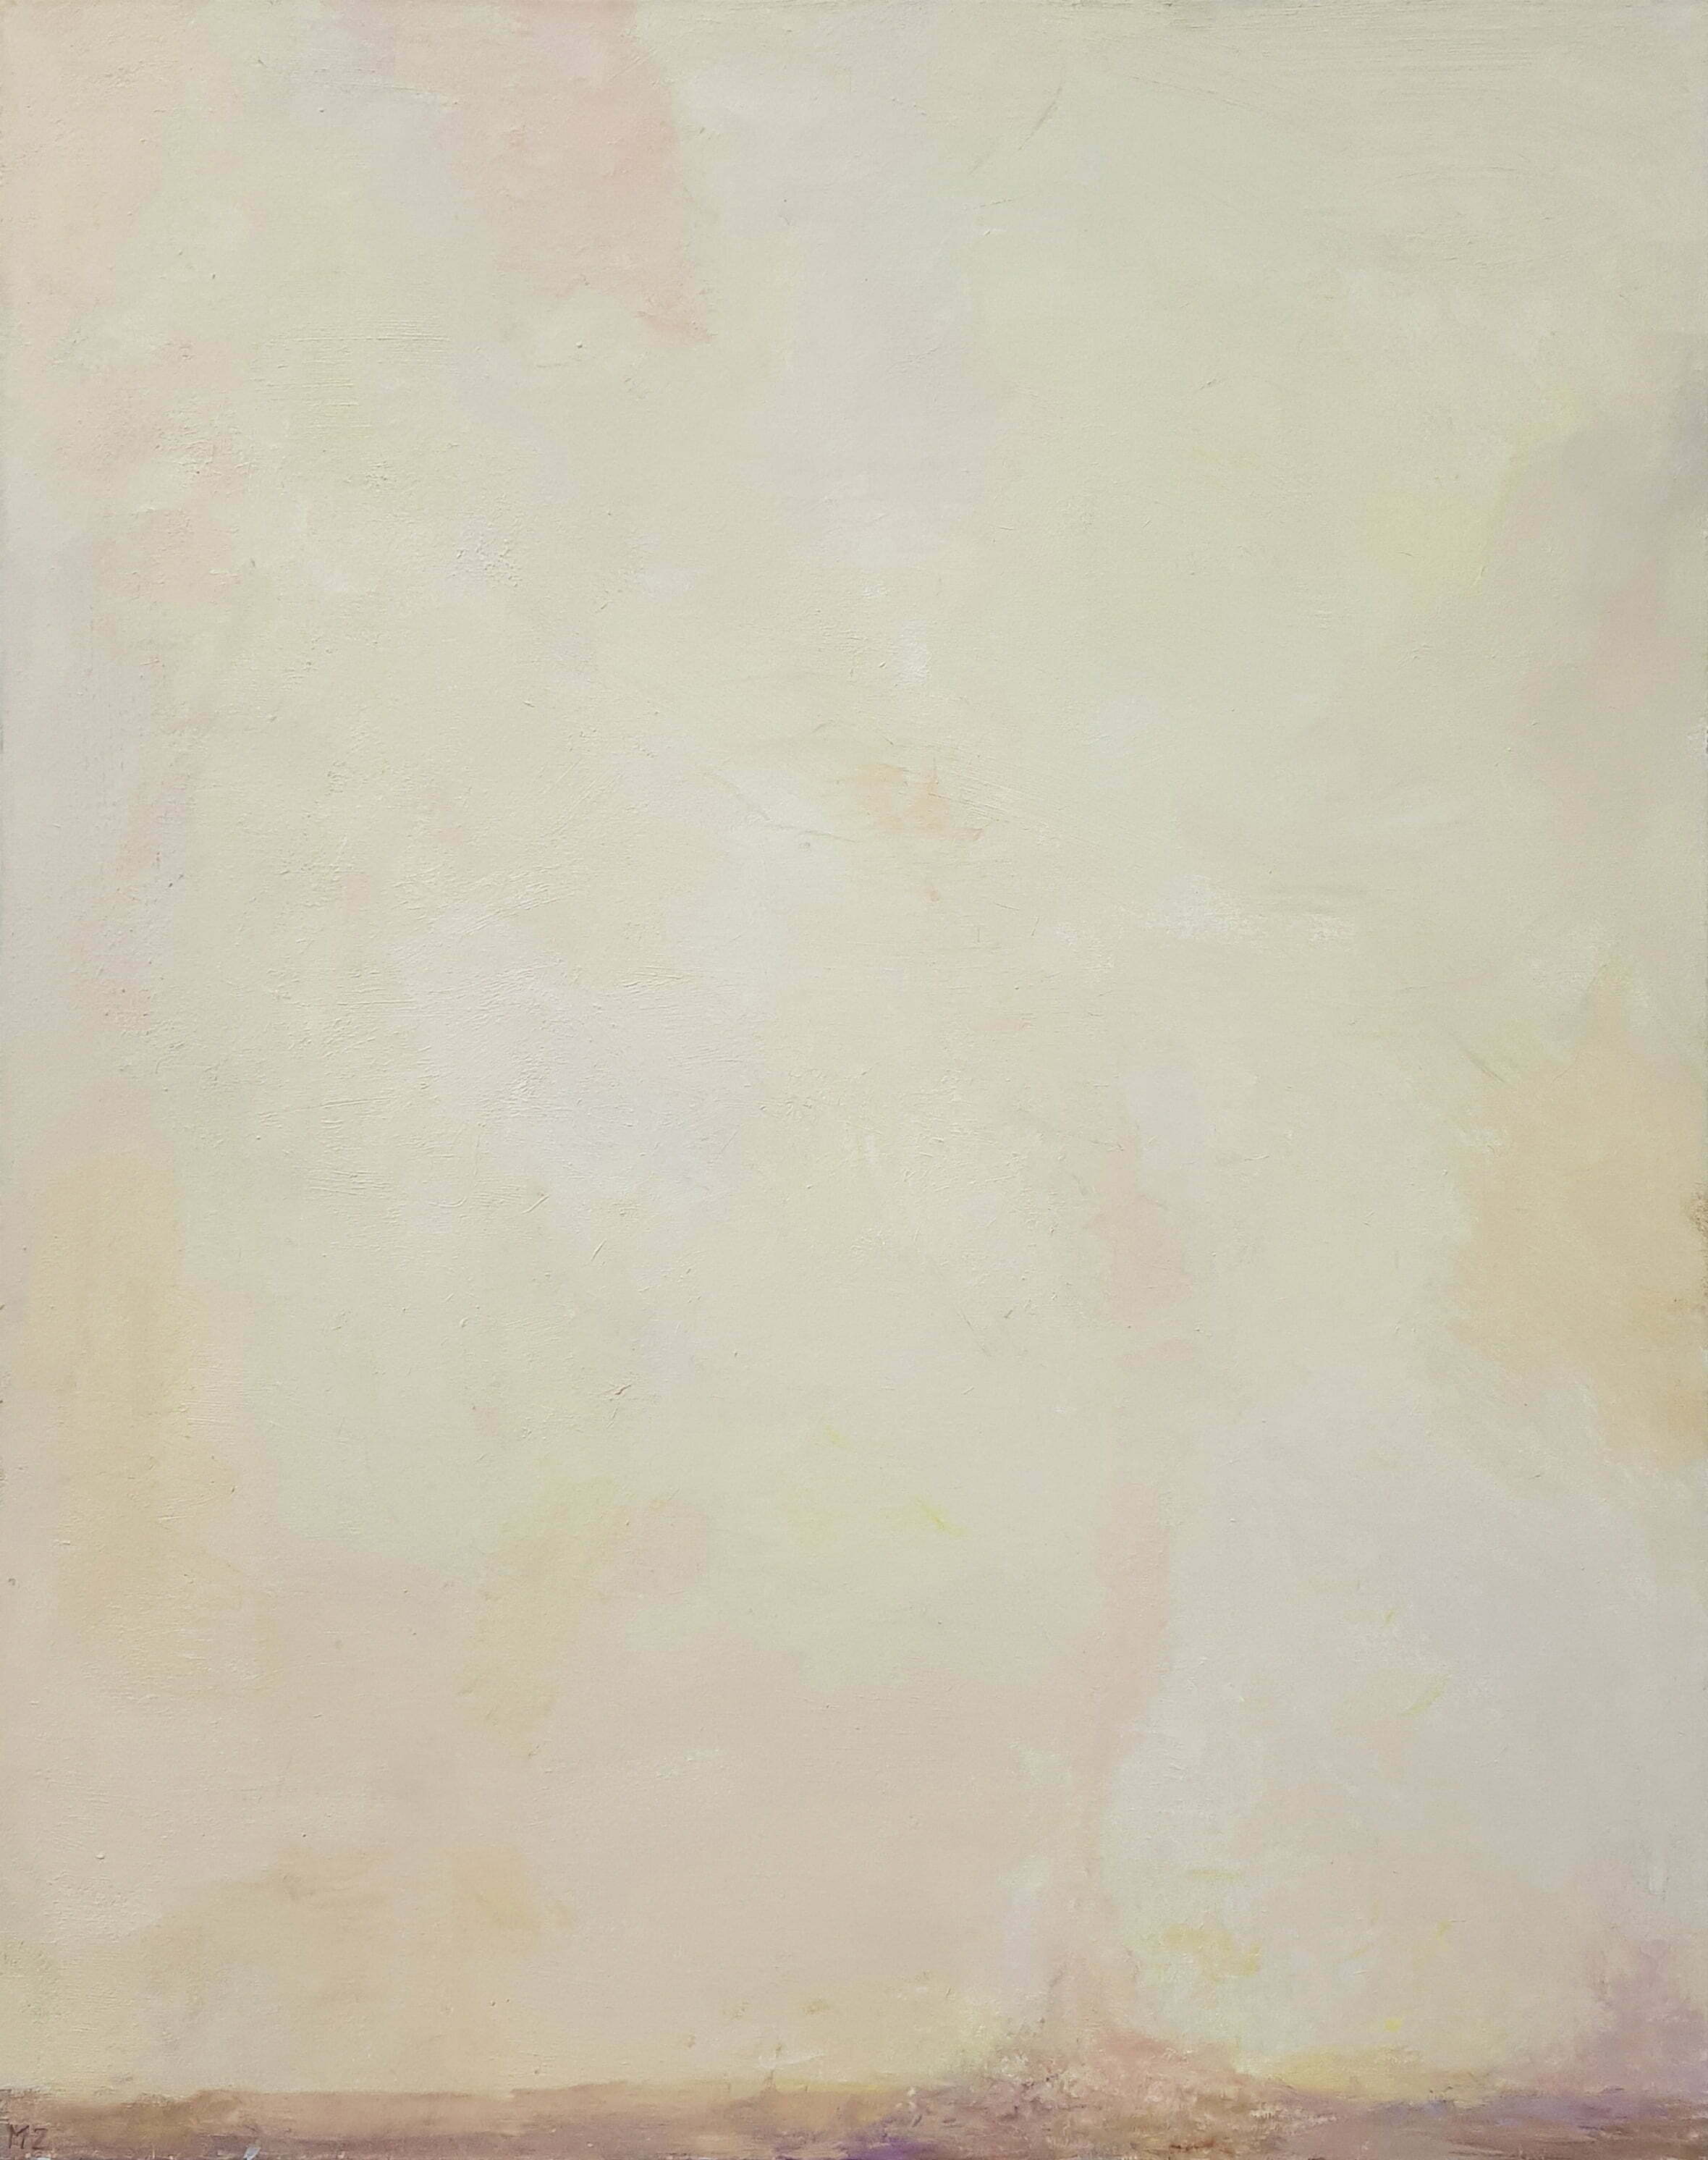 Martin Ziegelmüller, Fukushima verstrahlt, Öl auf Leinwand, 140 x 110 cm